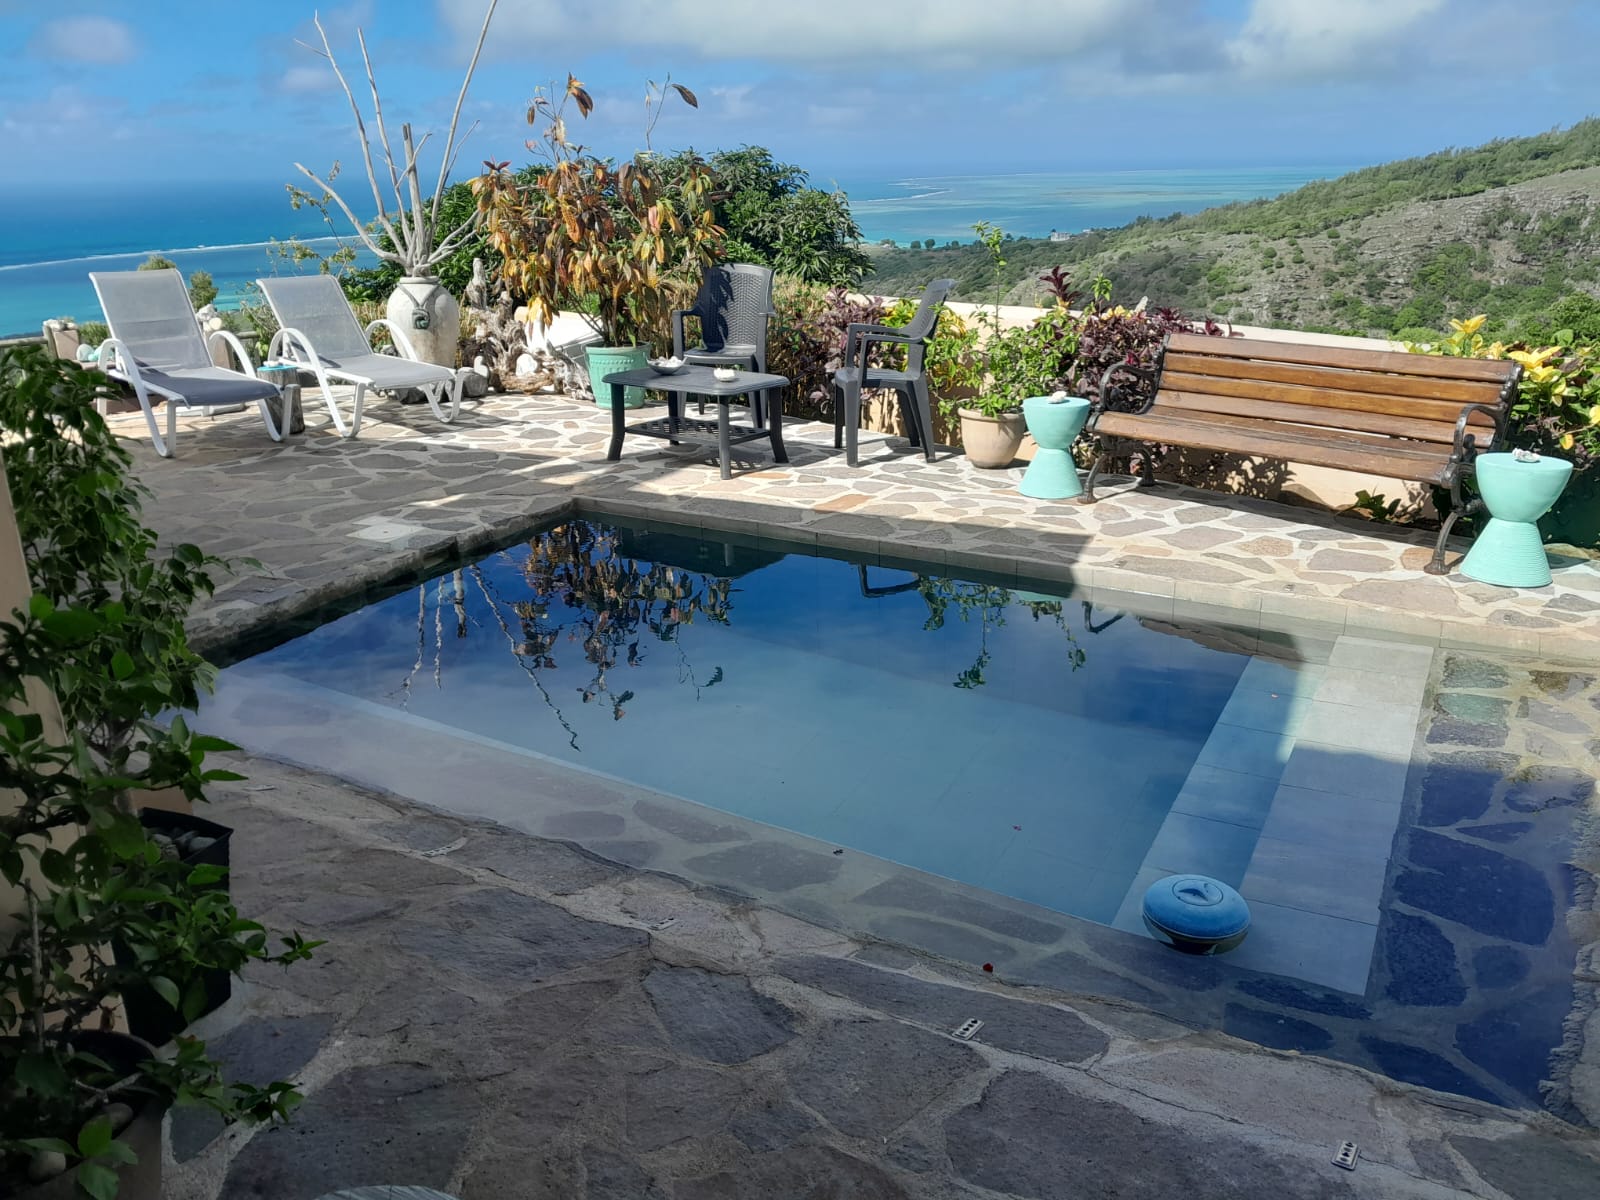 Rodrigues Island, vacation homes, private villa rental, apartment rental in Rodrigues